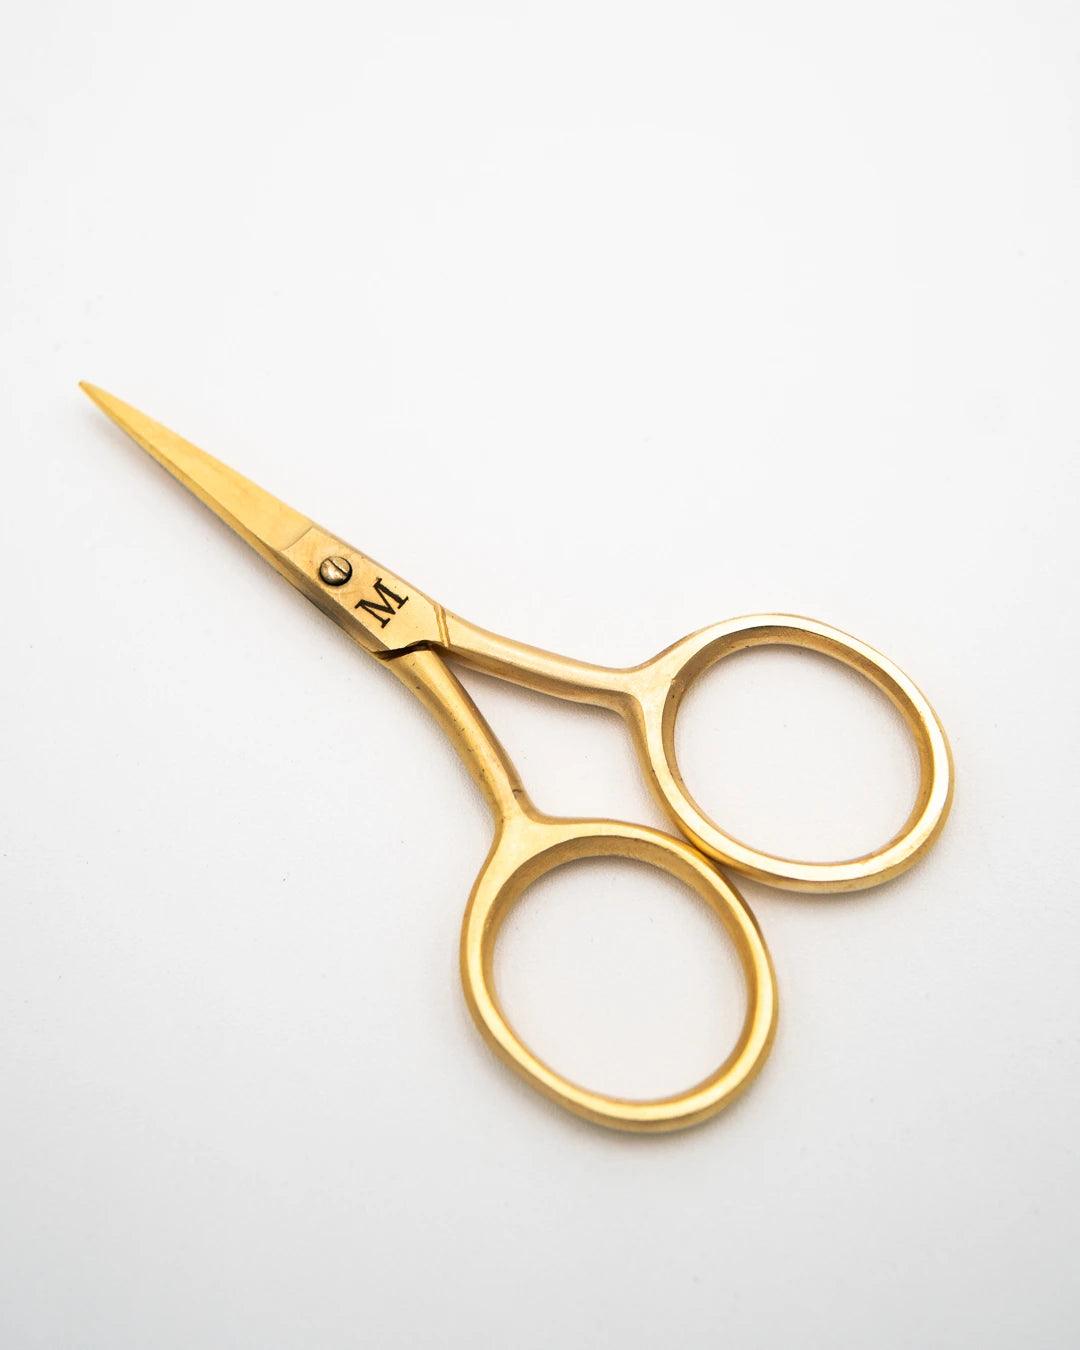 Fine Work Gold Scissors - Aimee Sher Makes